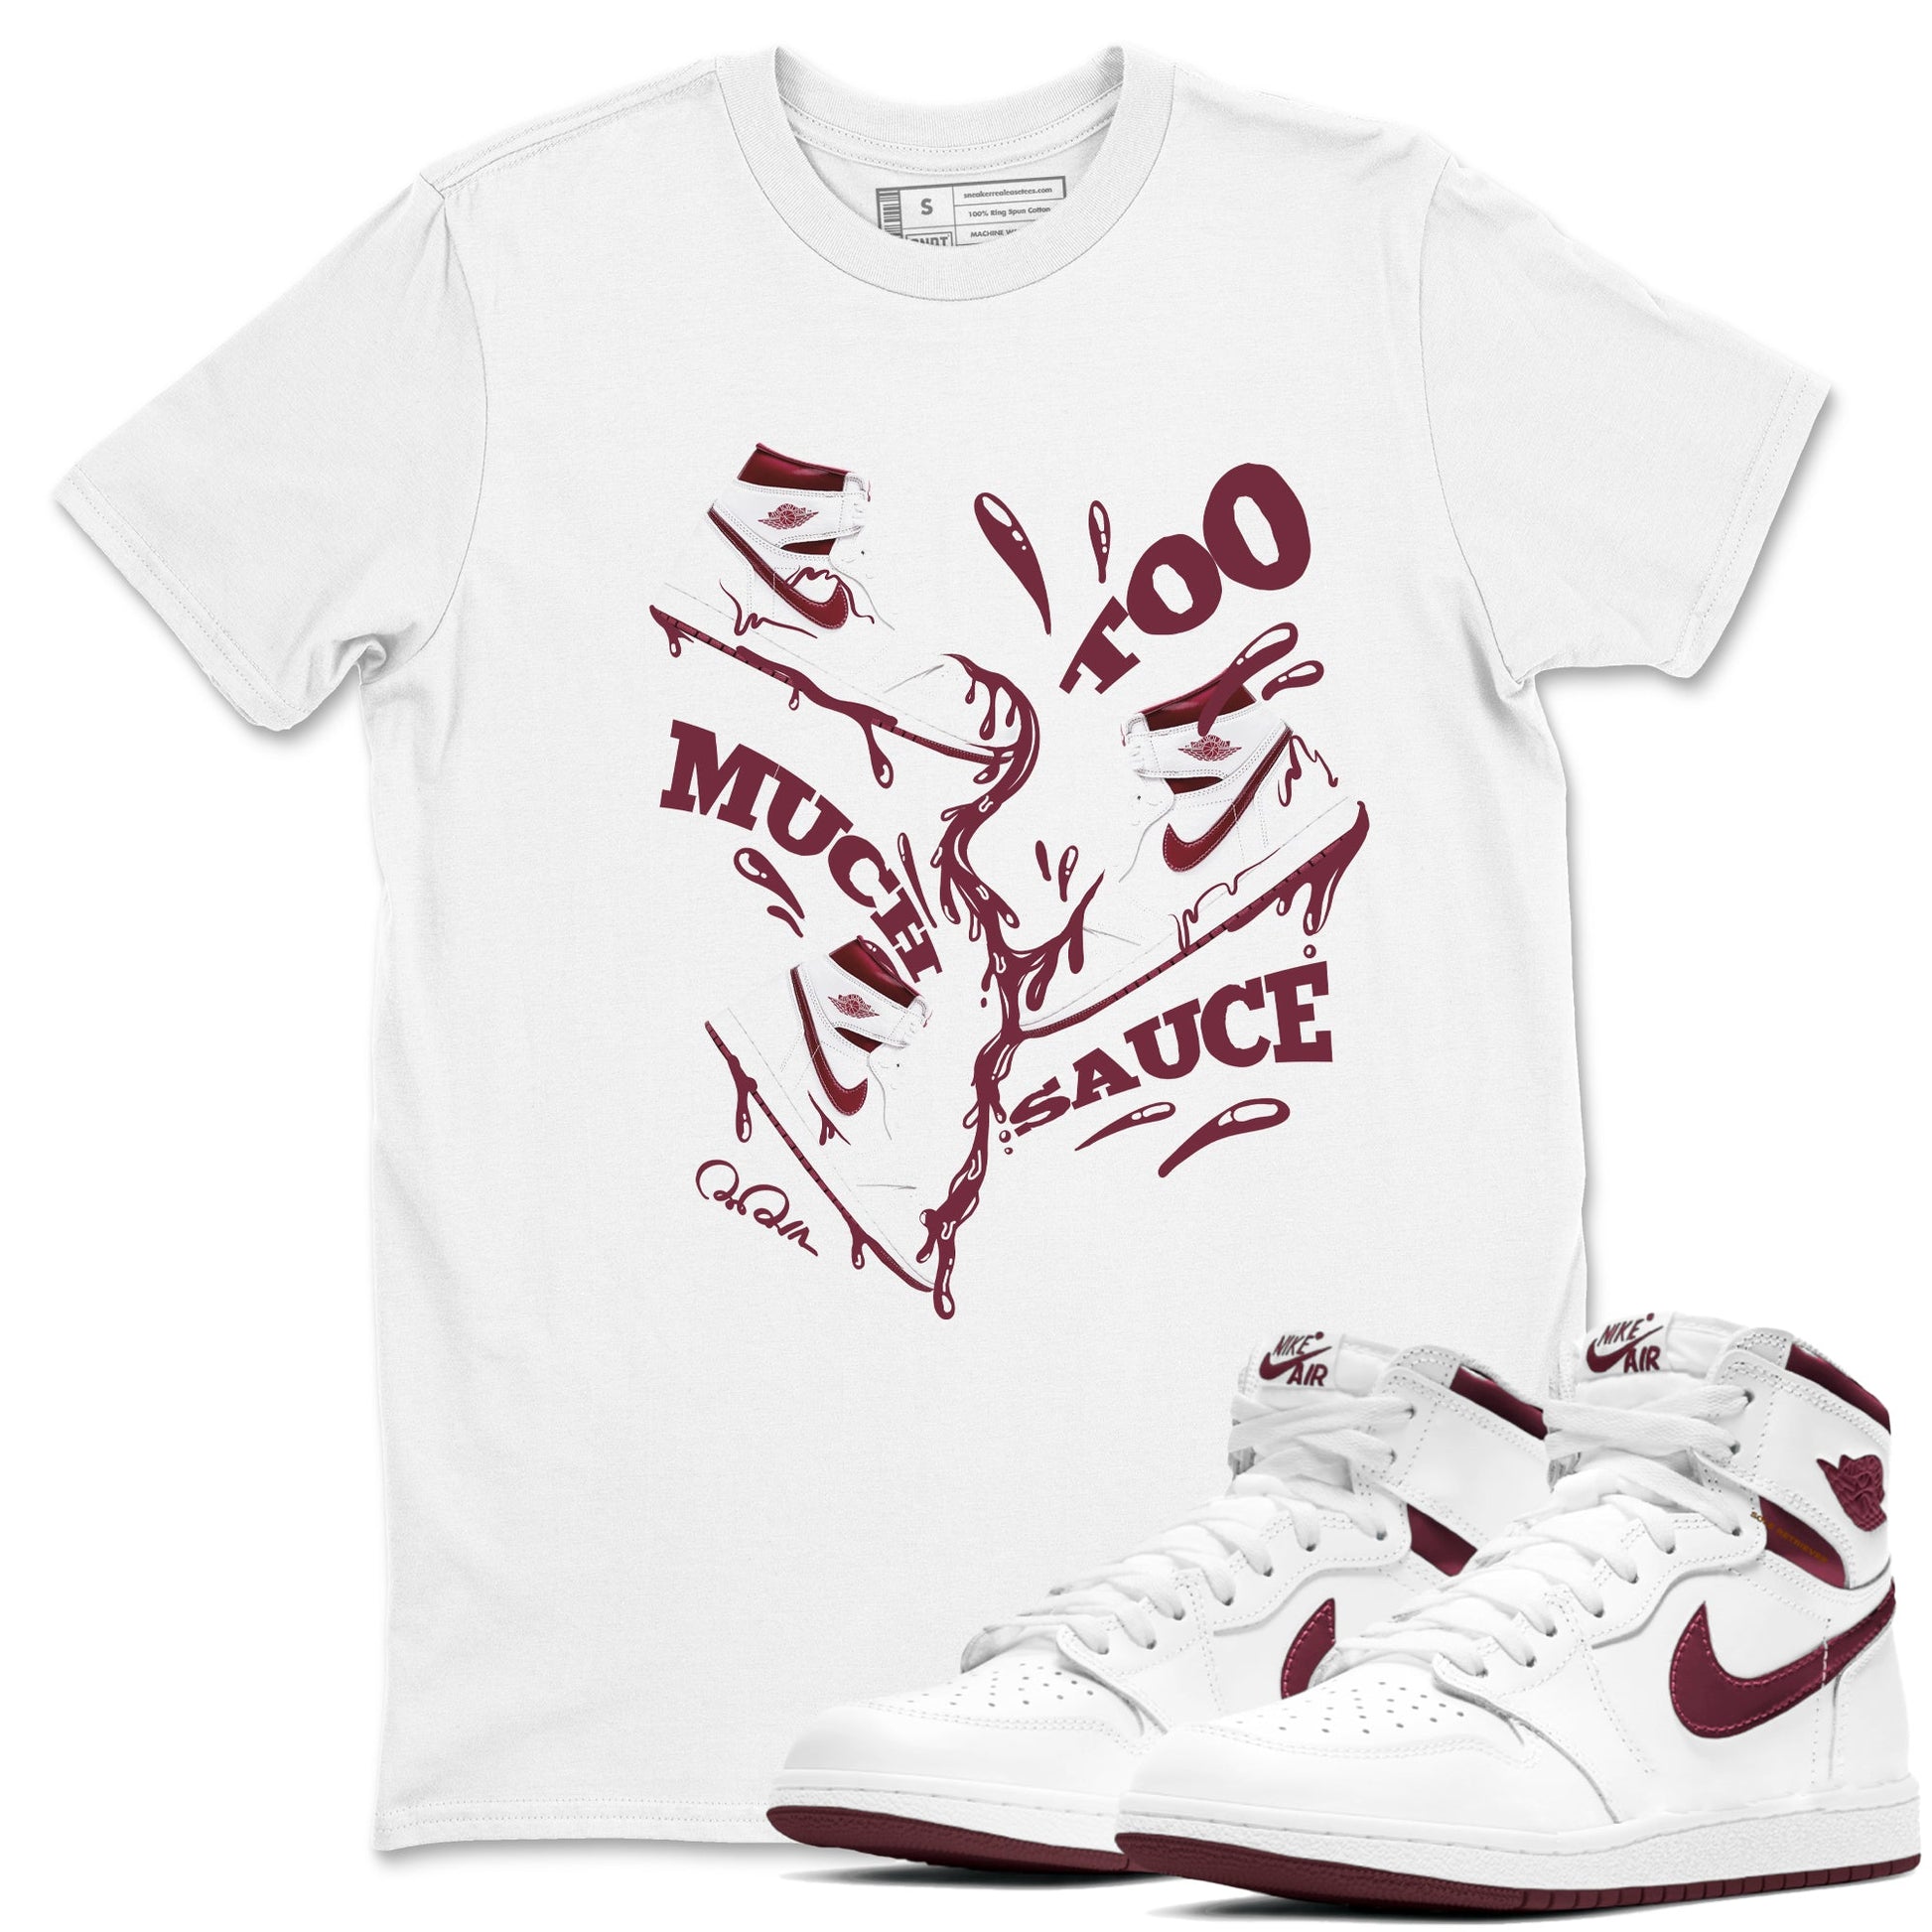 1s Metallic Burgundy shirt to match jordans Too Much Sauce sneaker tees AJ1 Metallic Burgundy SNRT Sneaker Release Tees Unisex White 1 T-Shirt